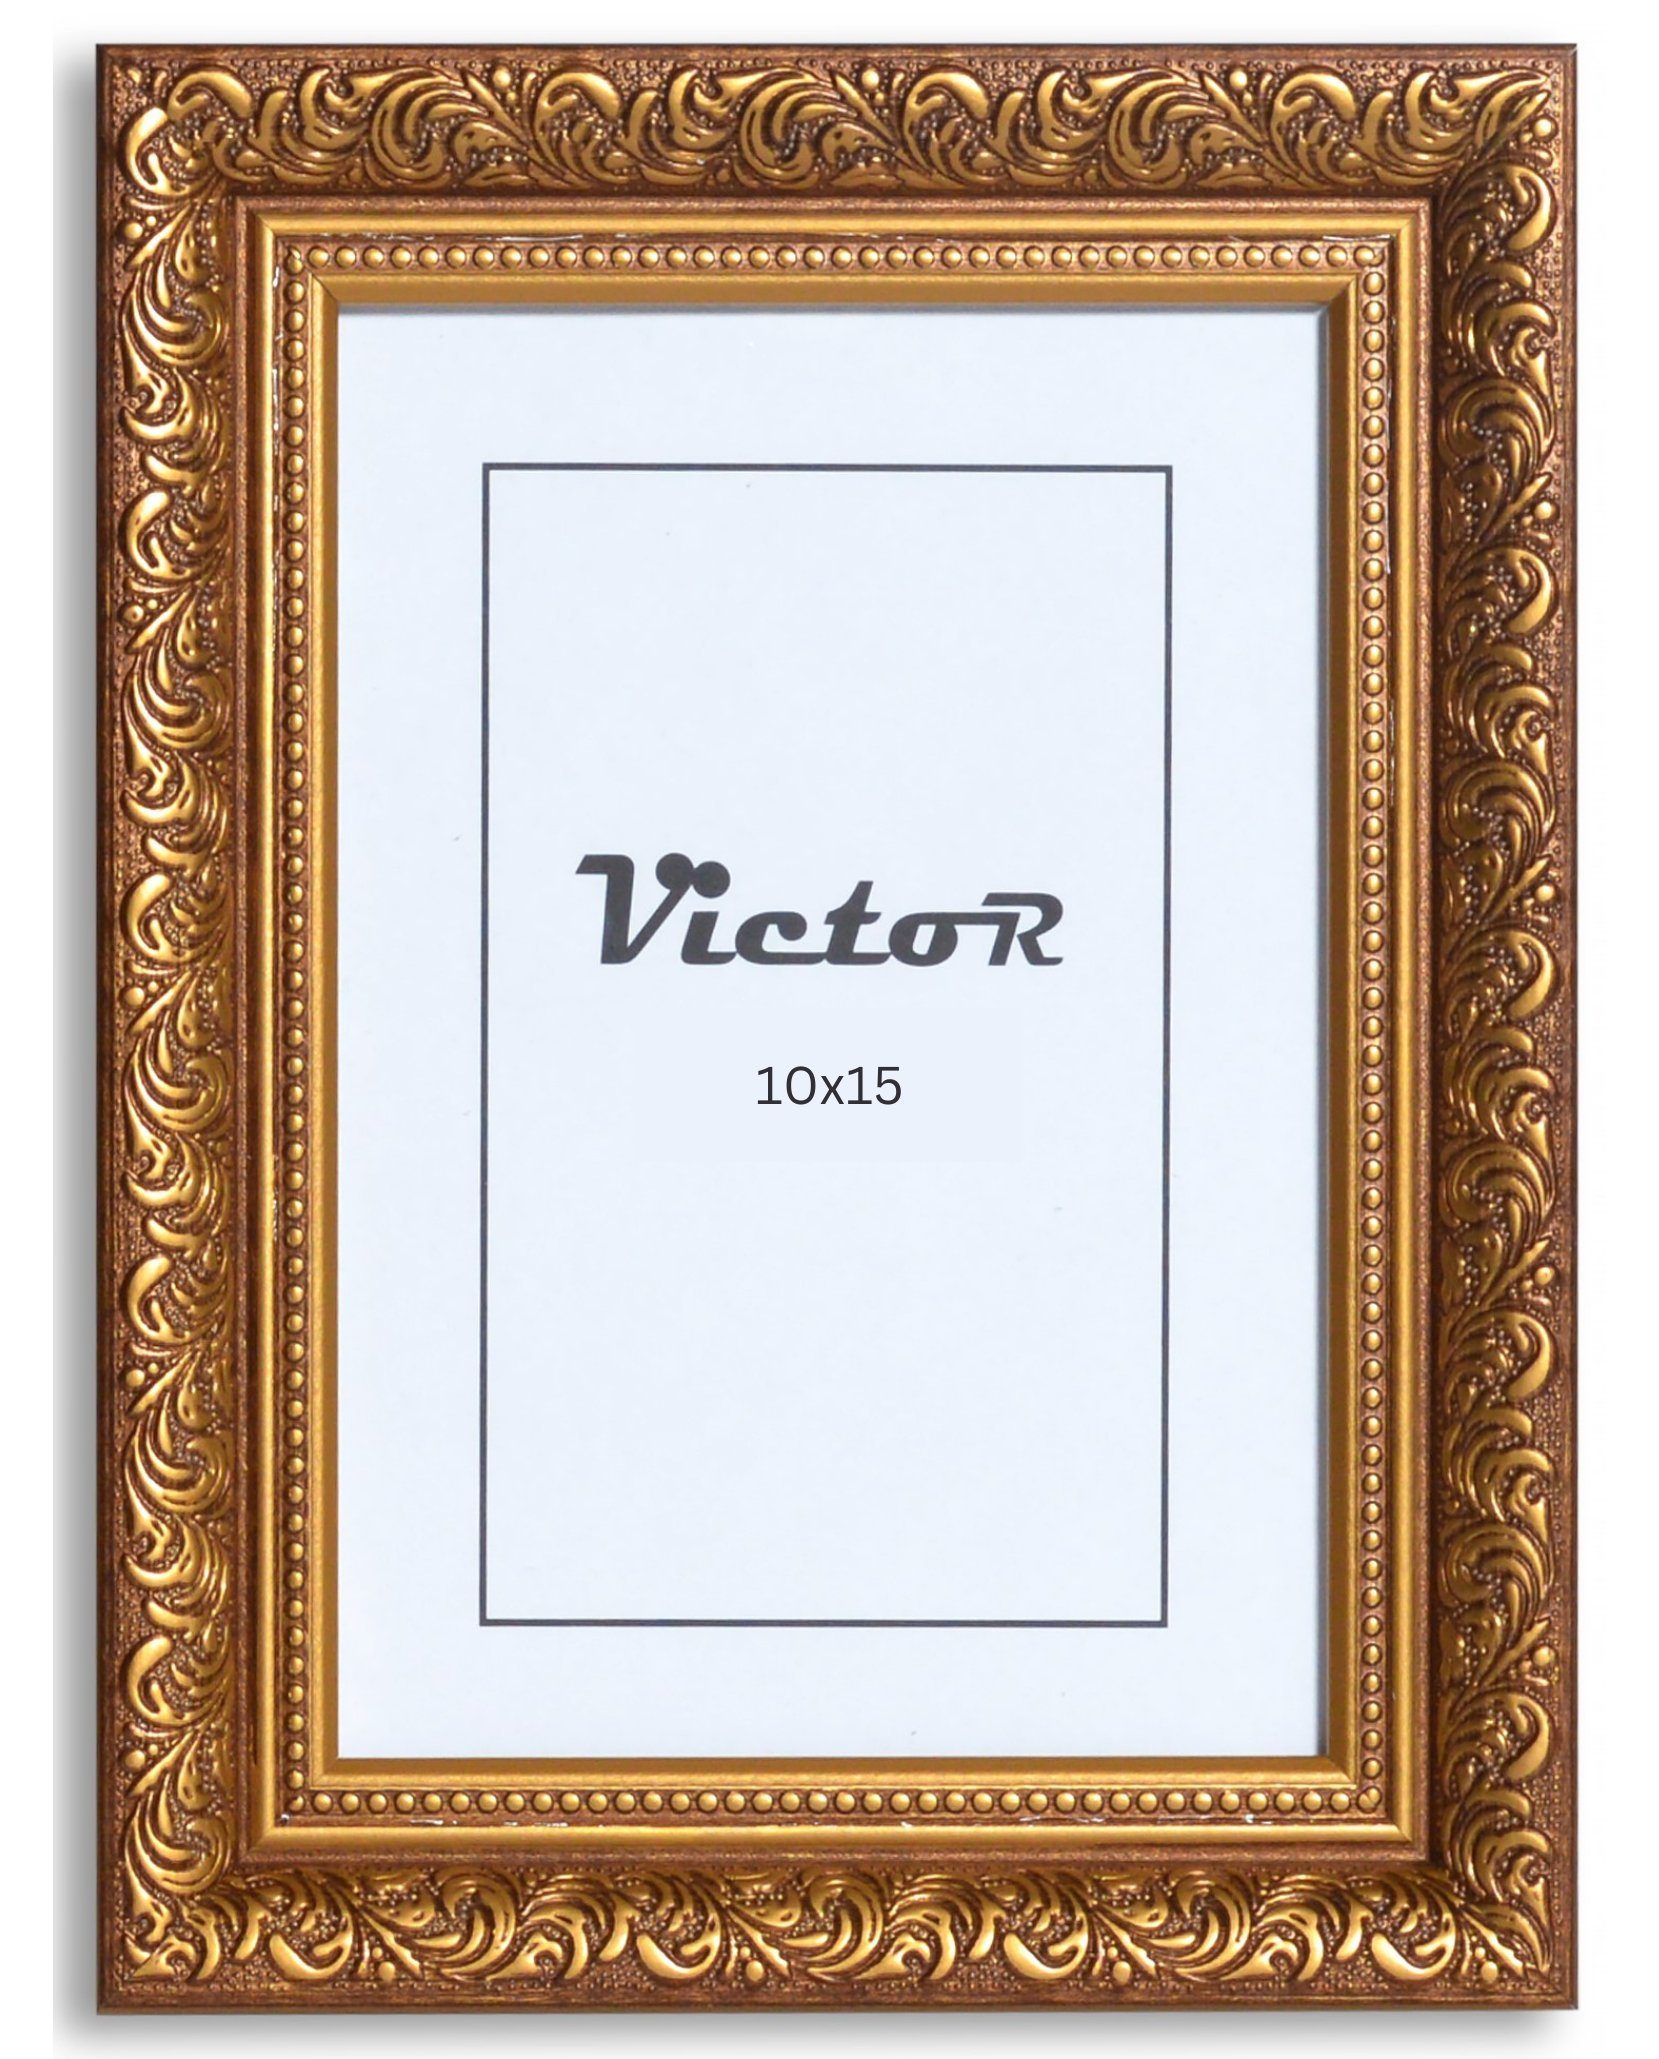 Victor 10x15 Gold A6, Braun Barock, Bilderrahmen Rubens, Antik (Zenith) Bilderrahmen cm Bilderrahmen